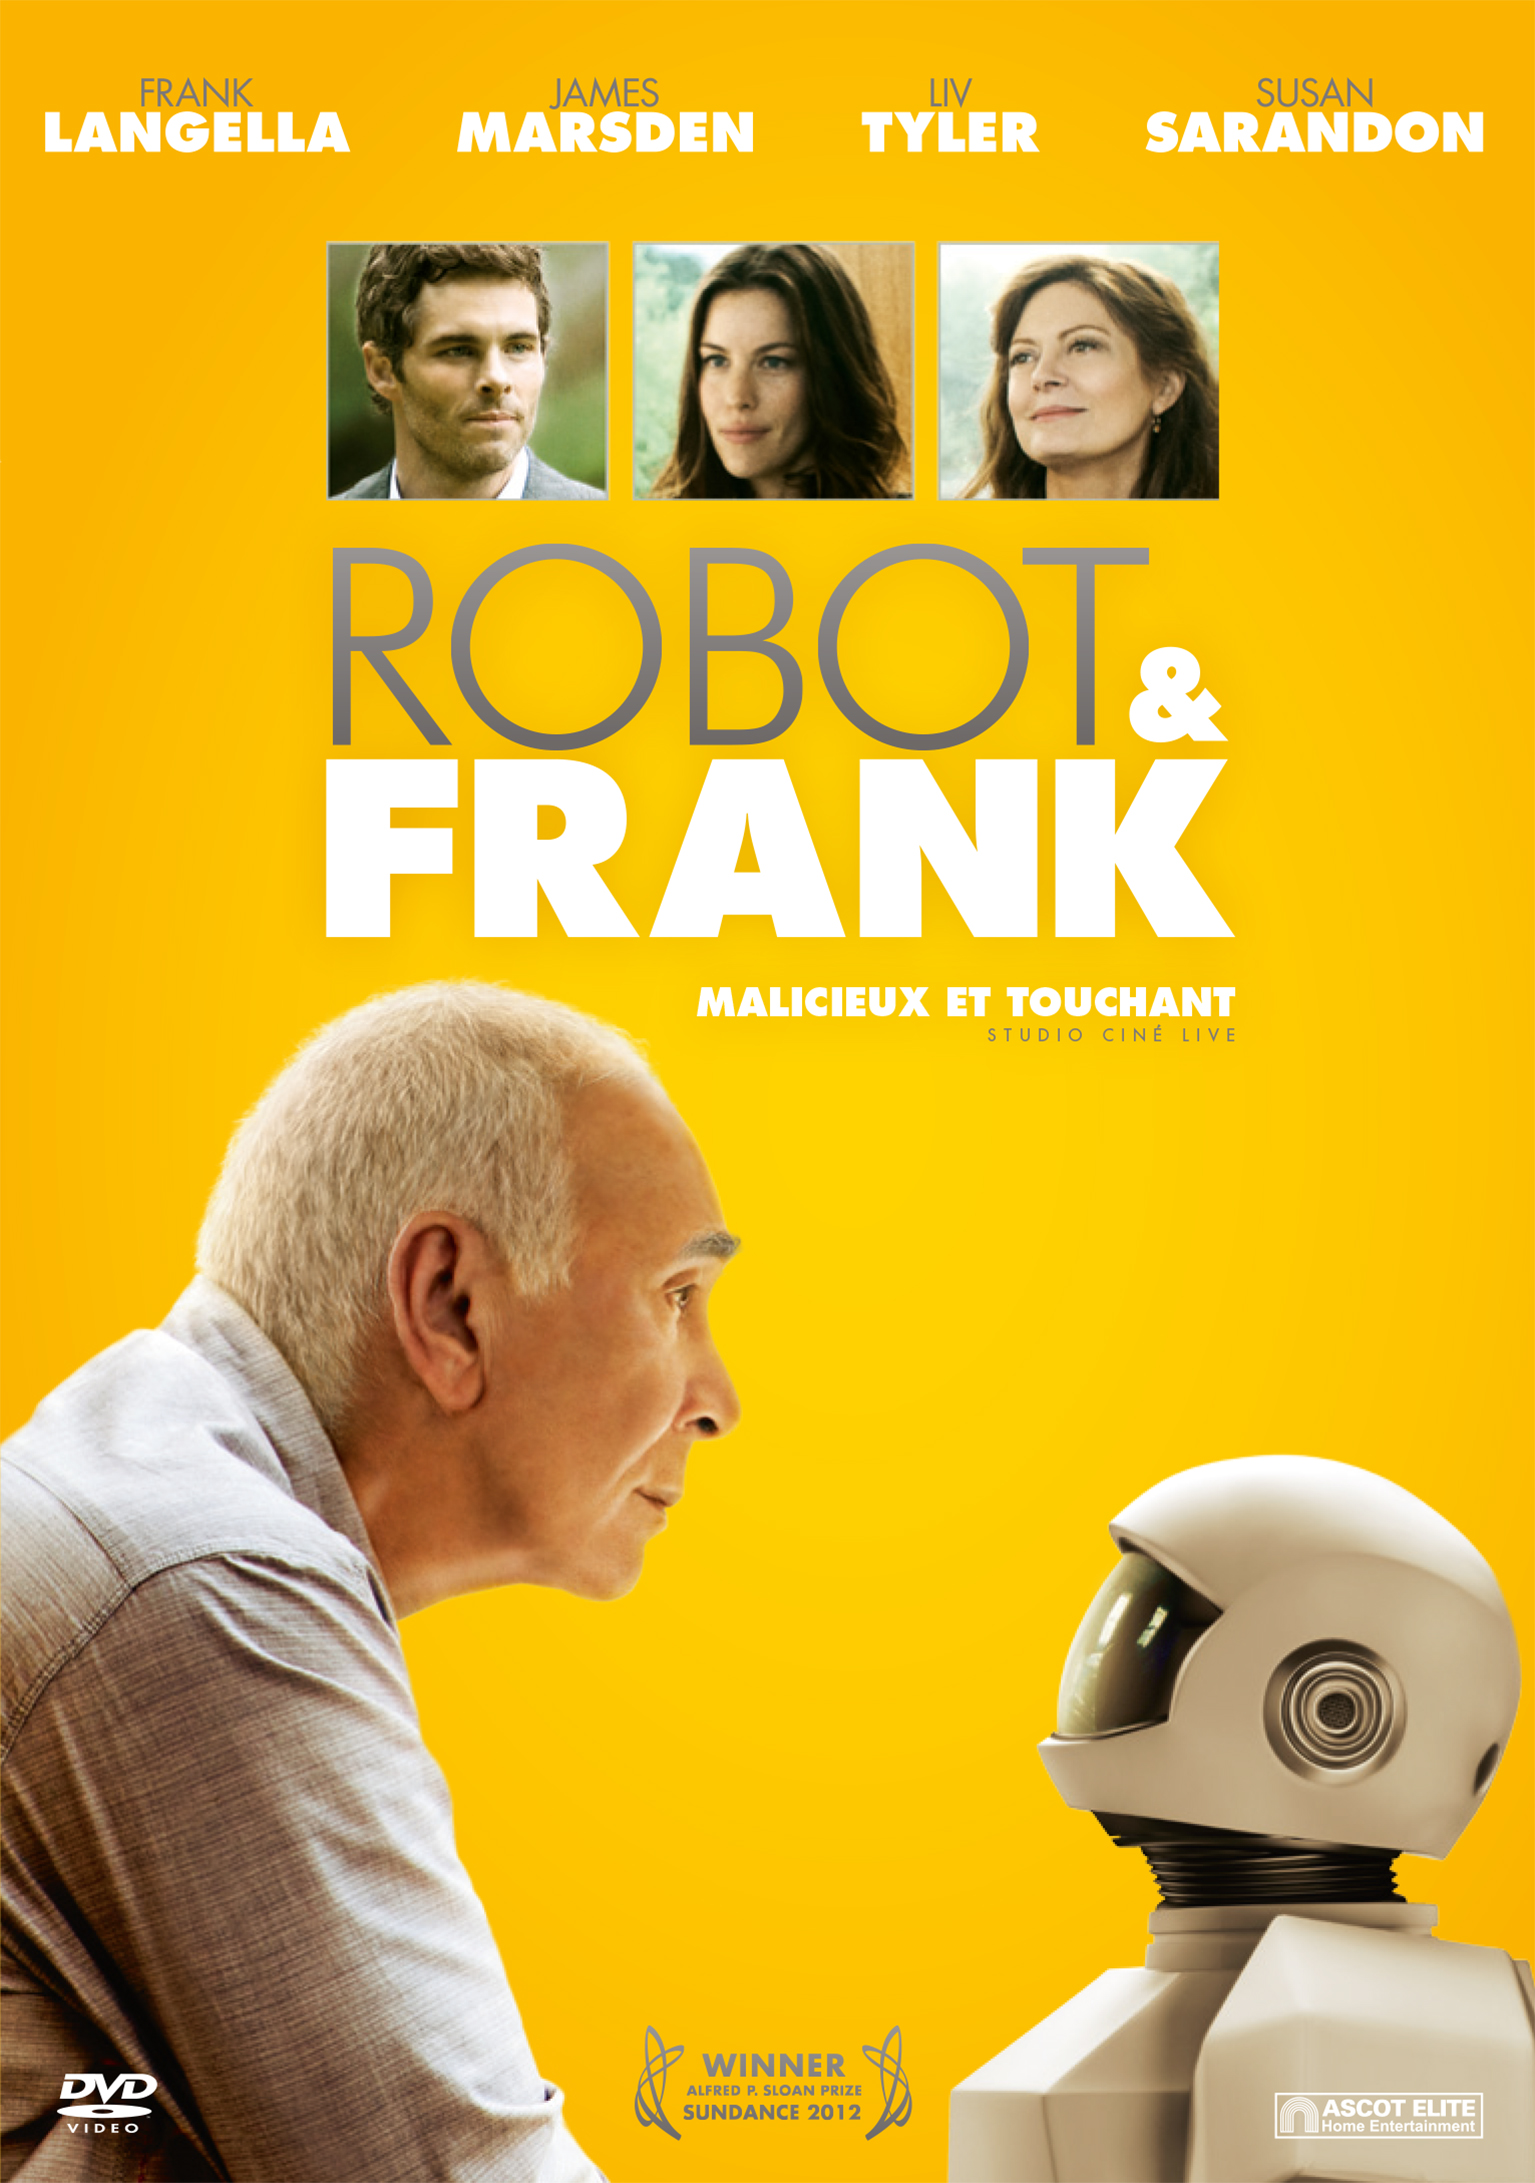 Robor & Frank